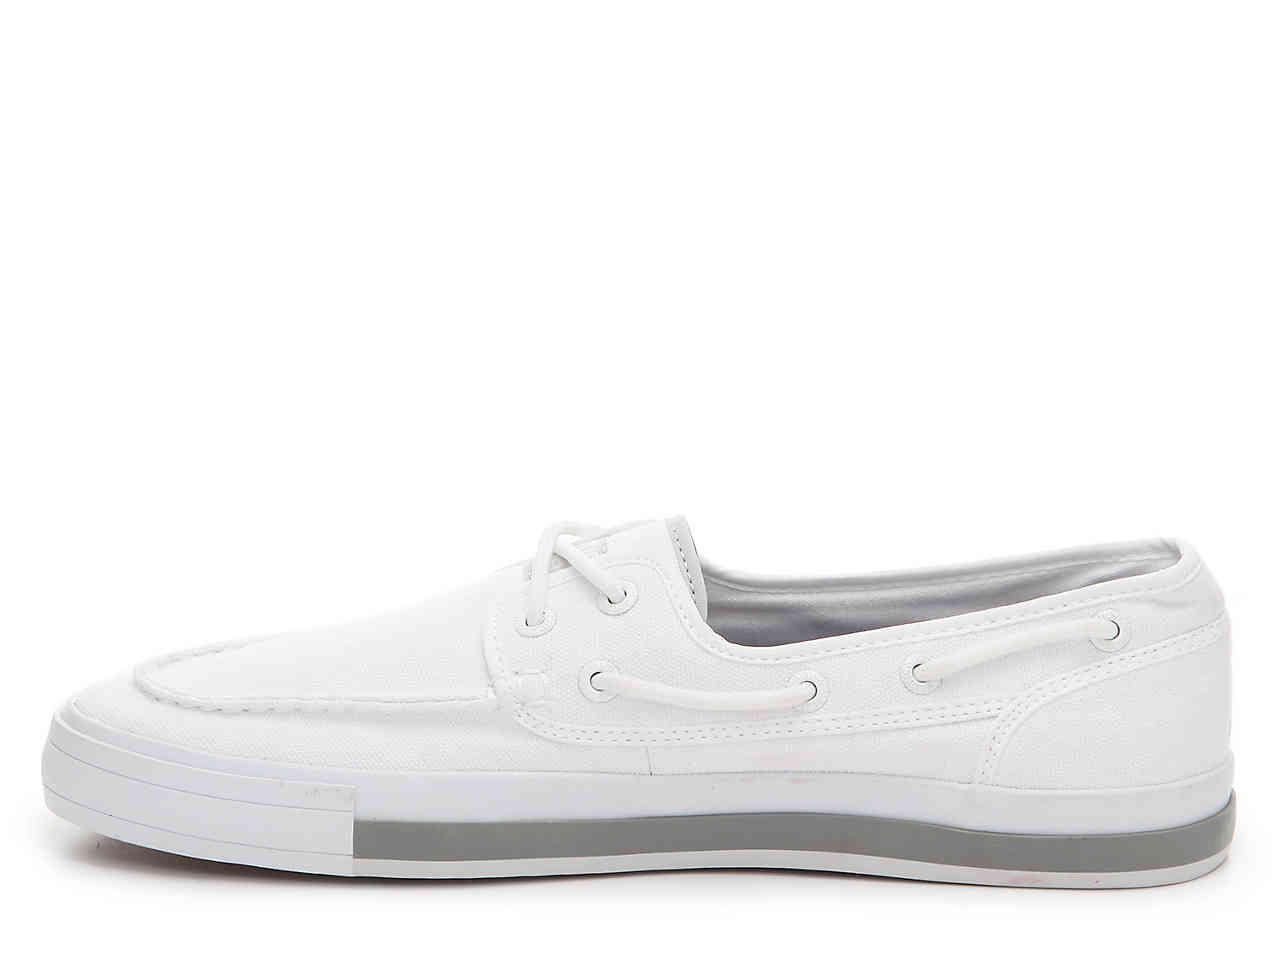 Nautica Spinnaker Boat Shoe in White for Men - Lyst